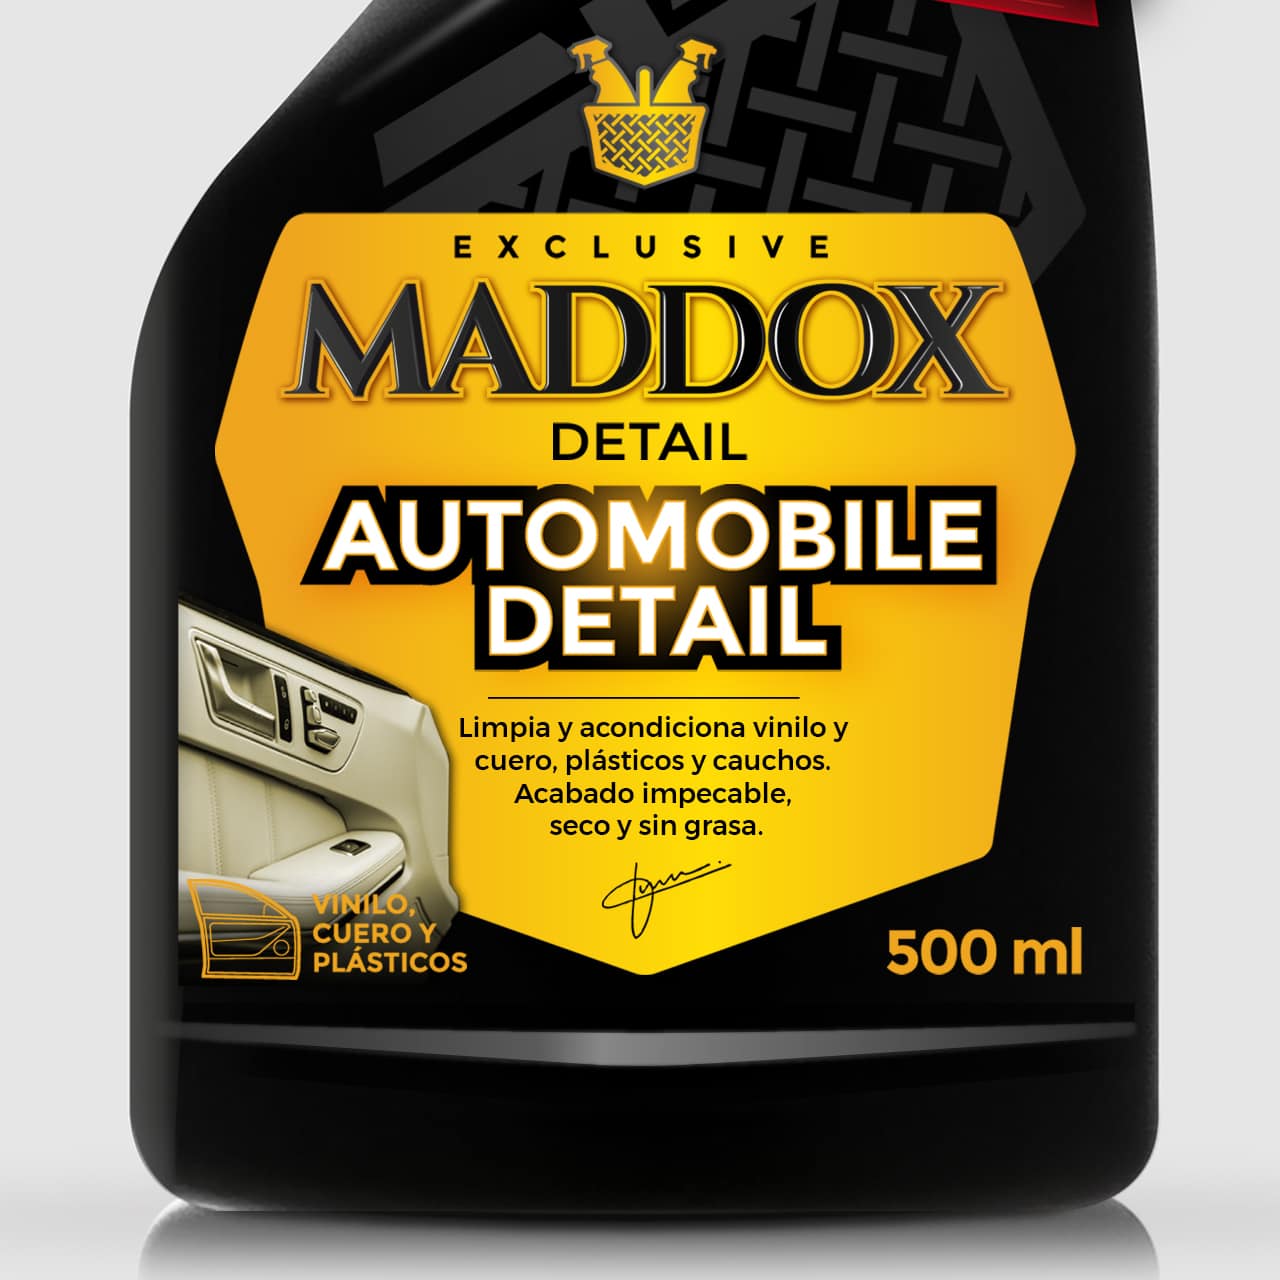 AUTOMOBILE DETAIL – Maddox Detail